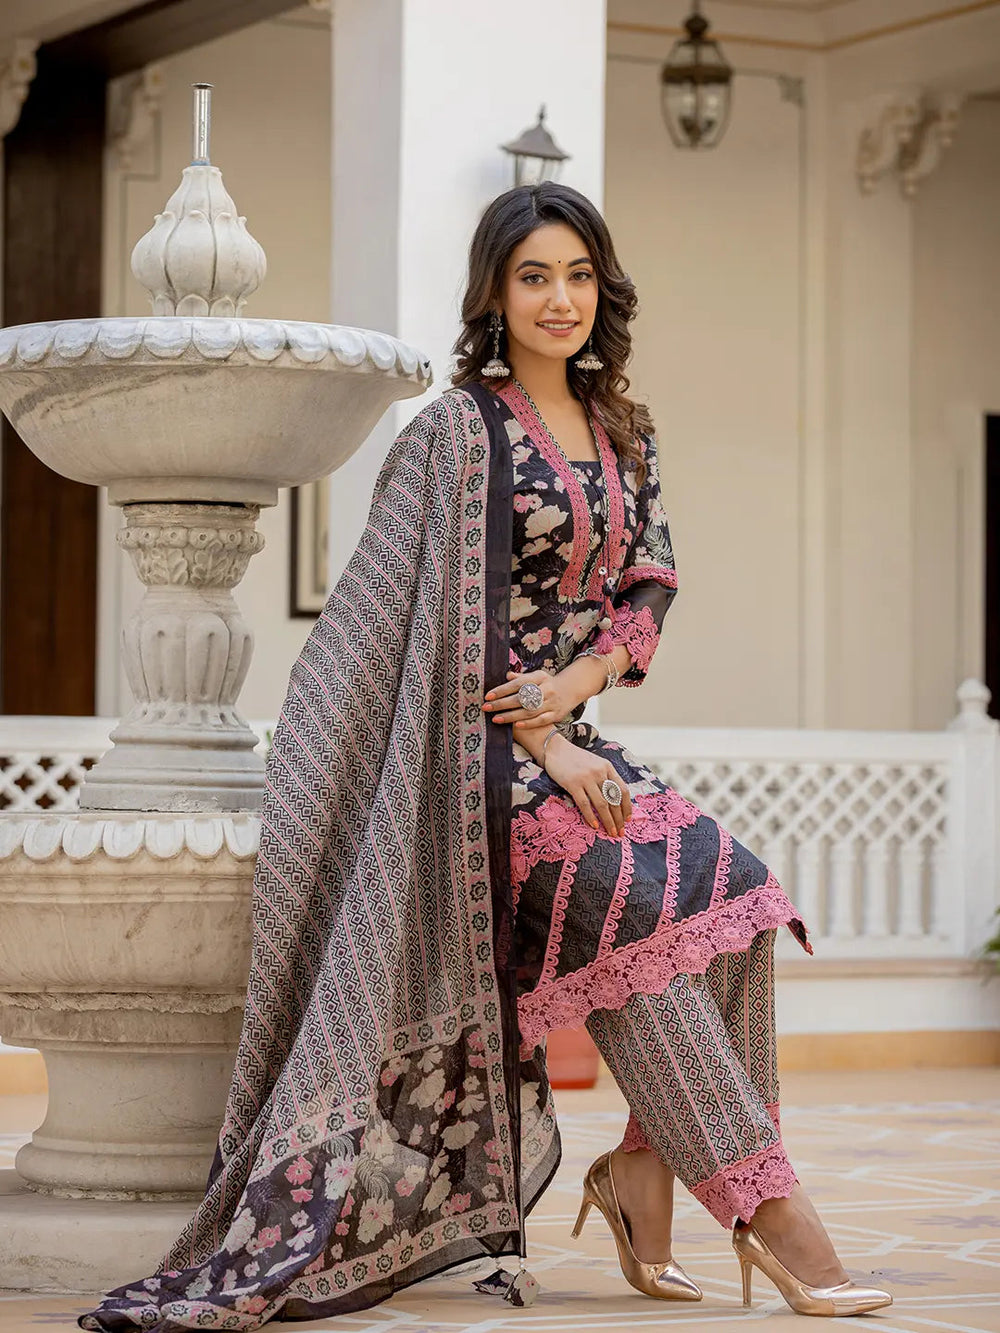 Black Floral Print Pakistani Style Kurta Trouser And Dupatta Set With Lace Work-Yufta Store-6885SKDBKM